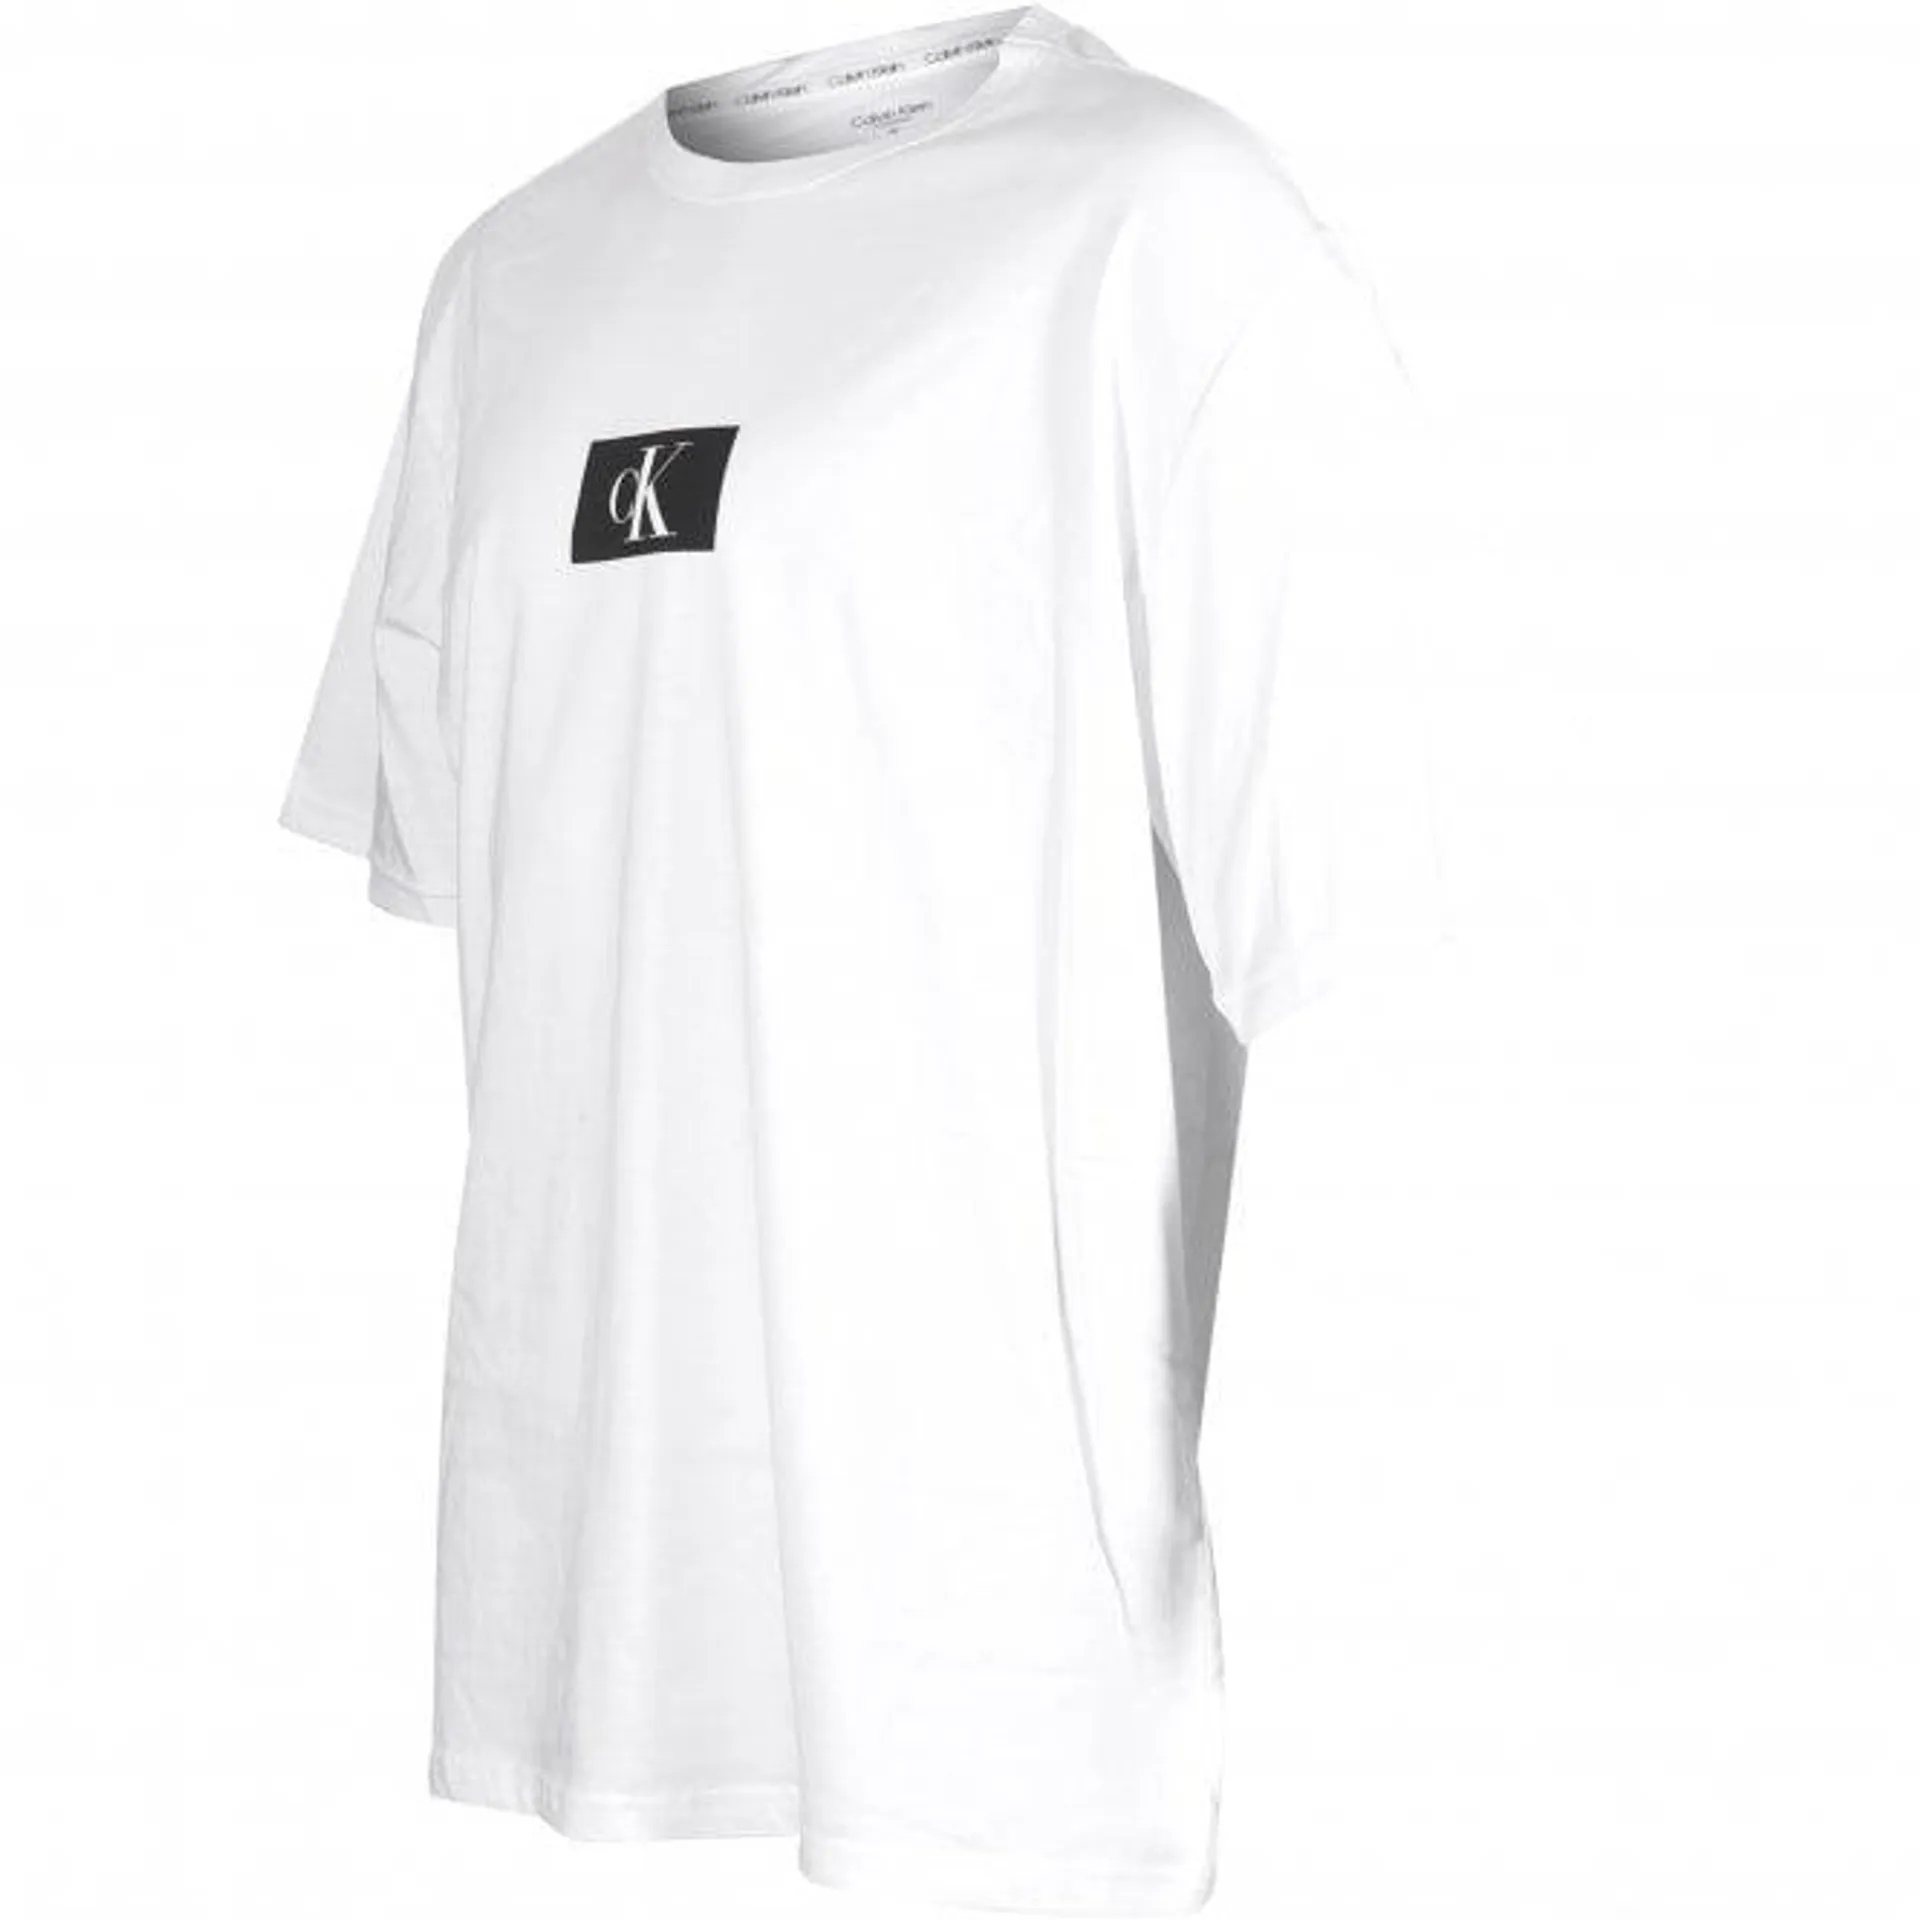 Calvin Klein CK 96 Organic Cotton T-Shirt, White